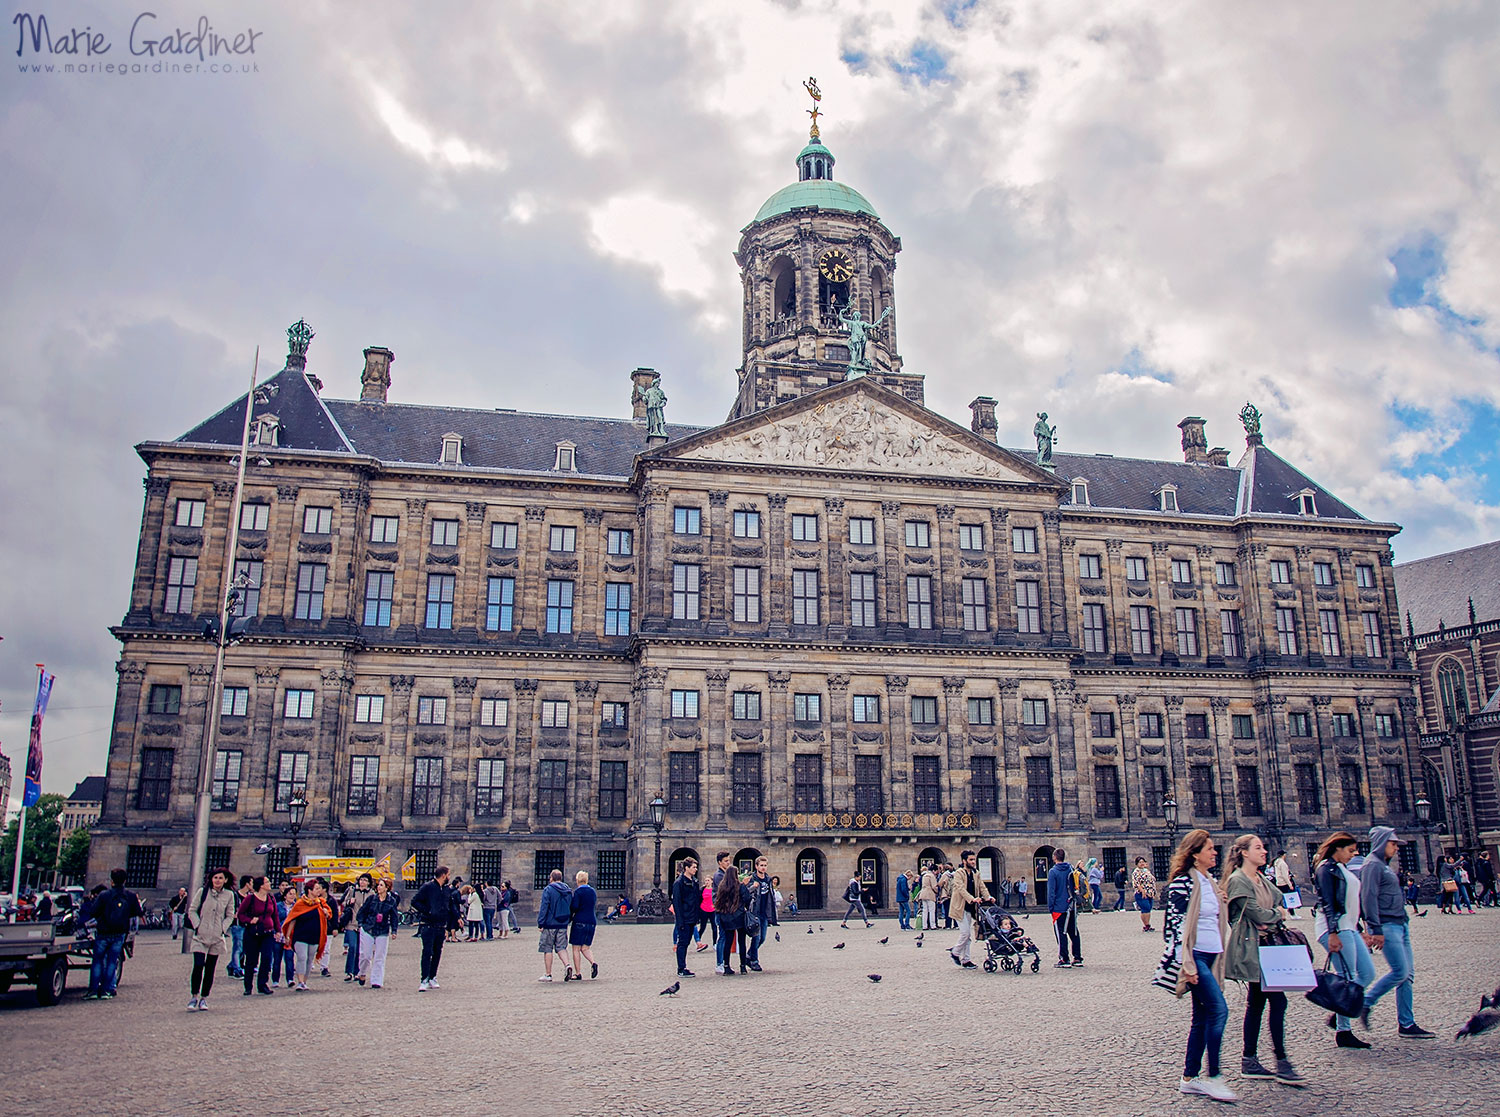 The Royal Palace, Amsterdam